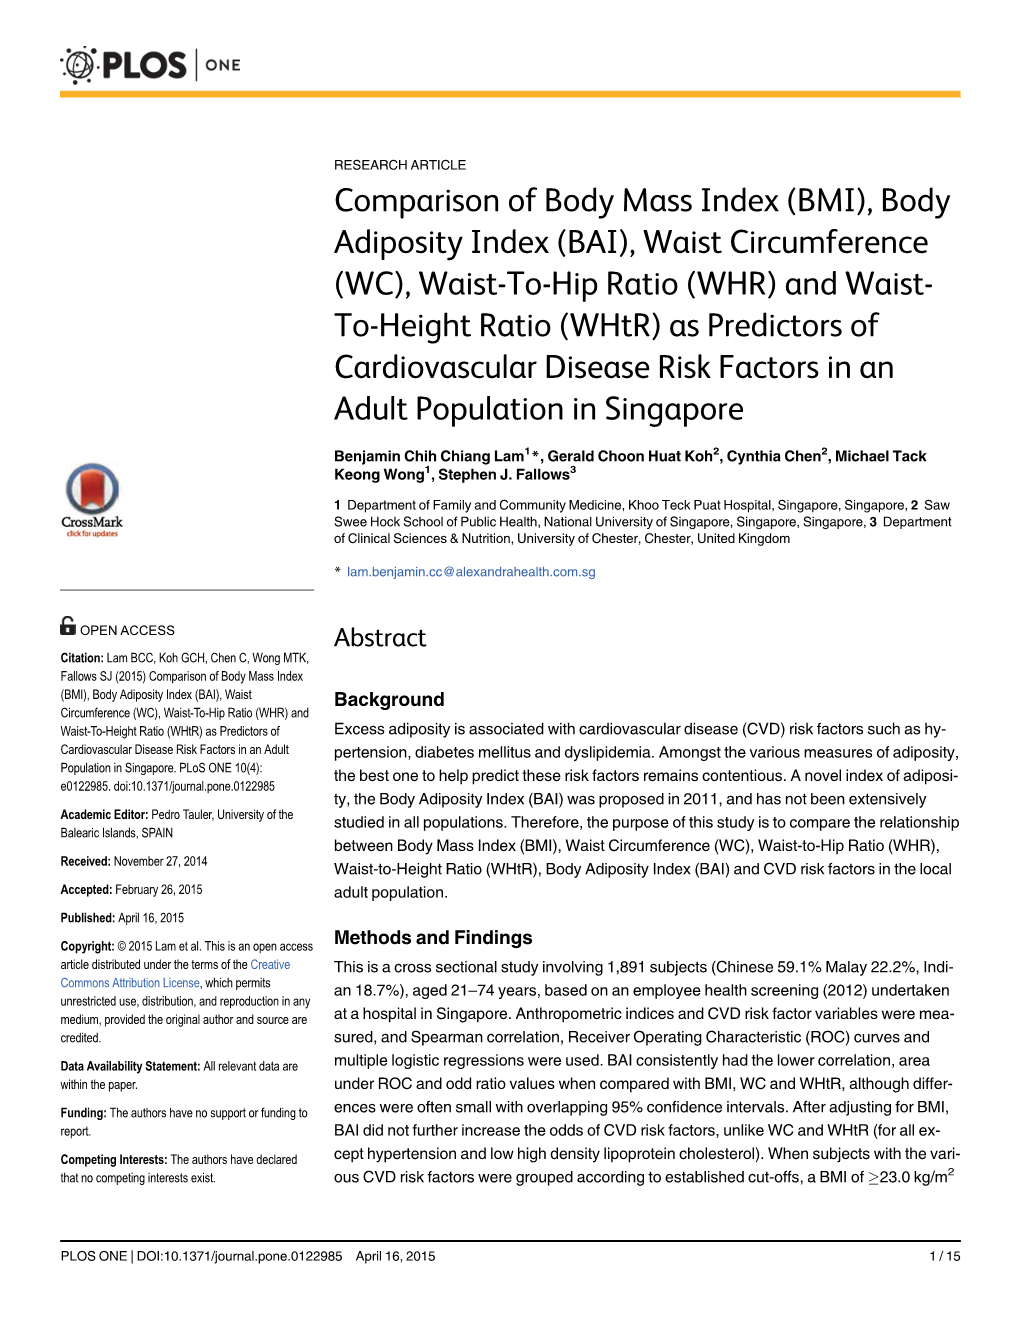 BMI), Body Adiposity Index (BAI), Waist Circumference (WC